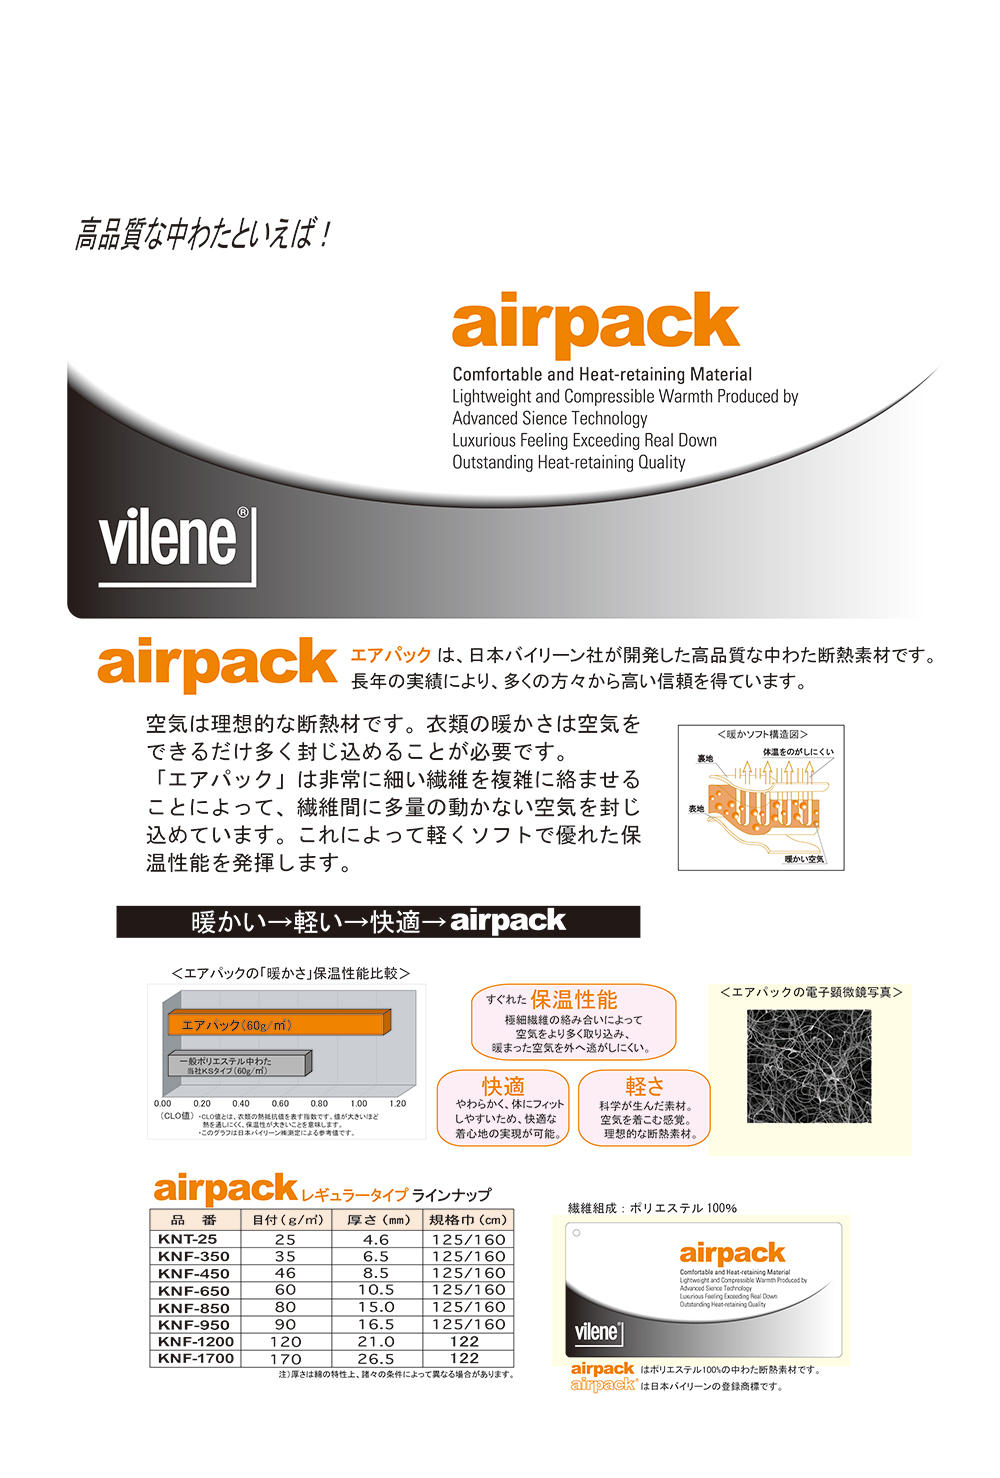 KNF1700 Bông Chần Air Pack 170g[Xen Kẽ] Vilene (JAPAN Vilene Mật)